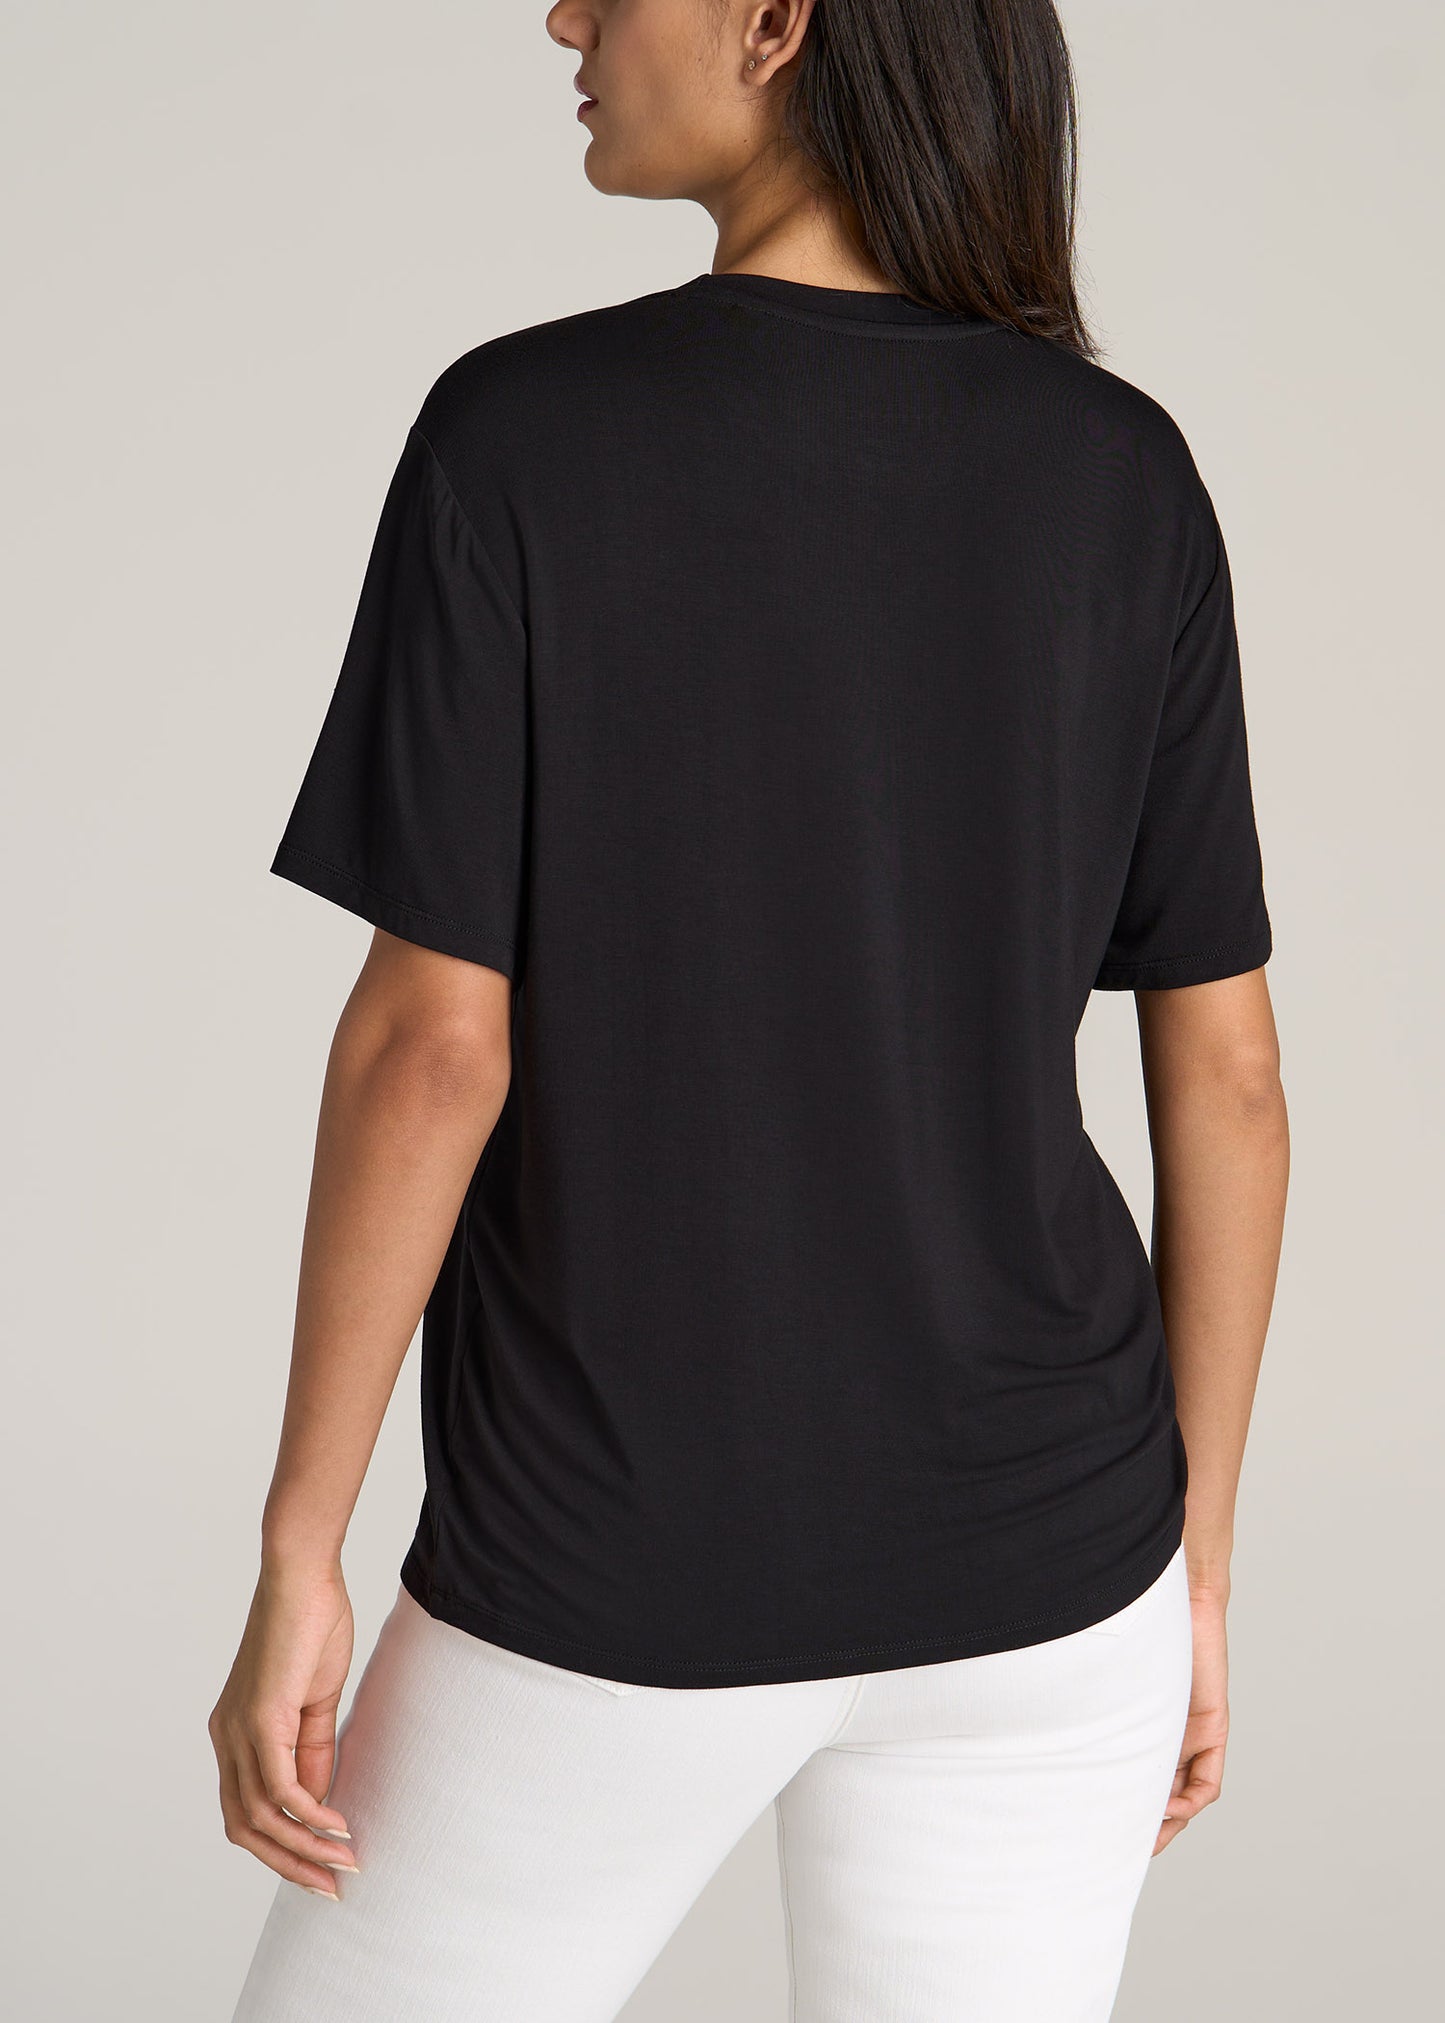 Women's Tall Short-Sleeve Oversized Crewneck Pocket Black T-Shirt